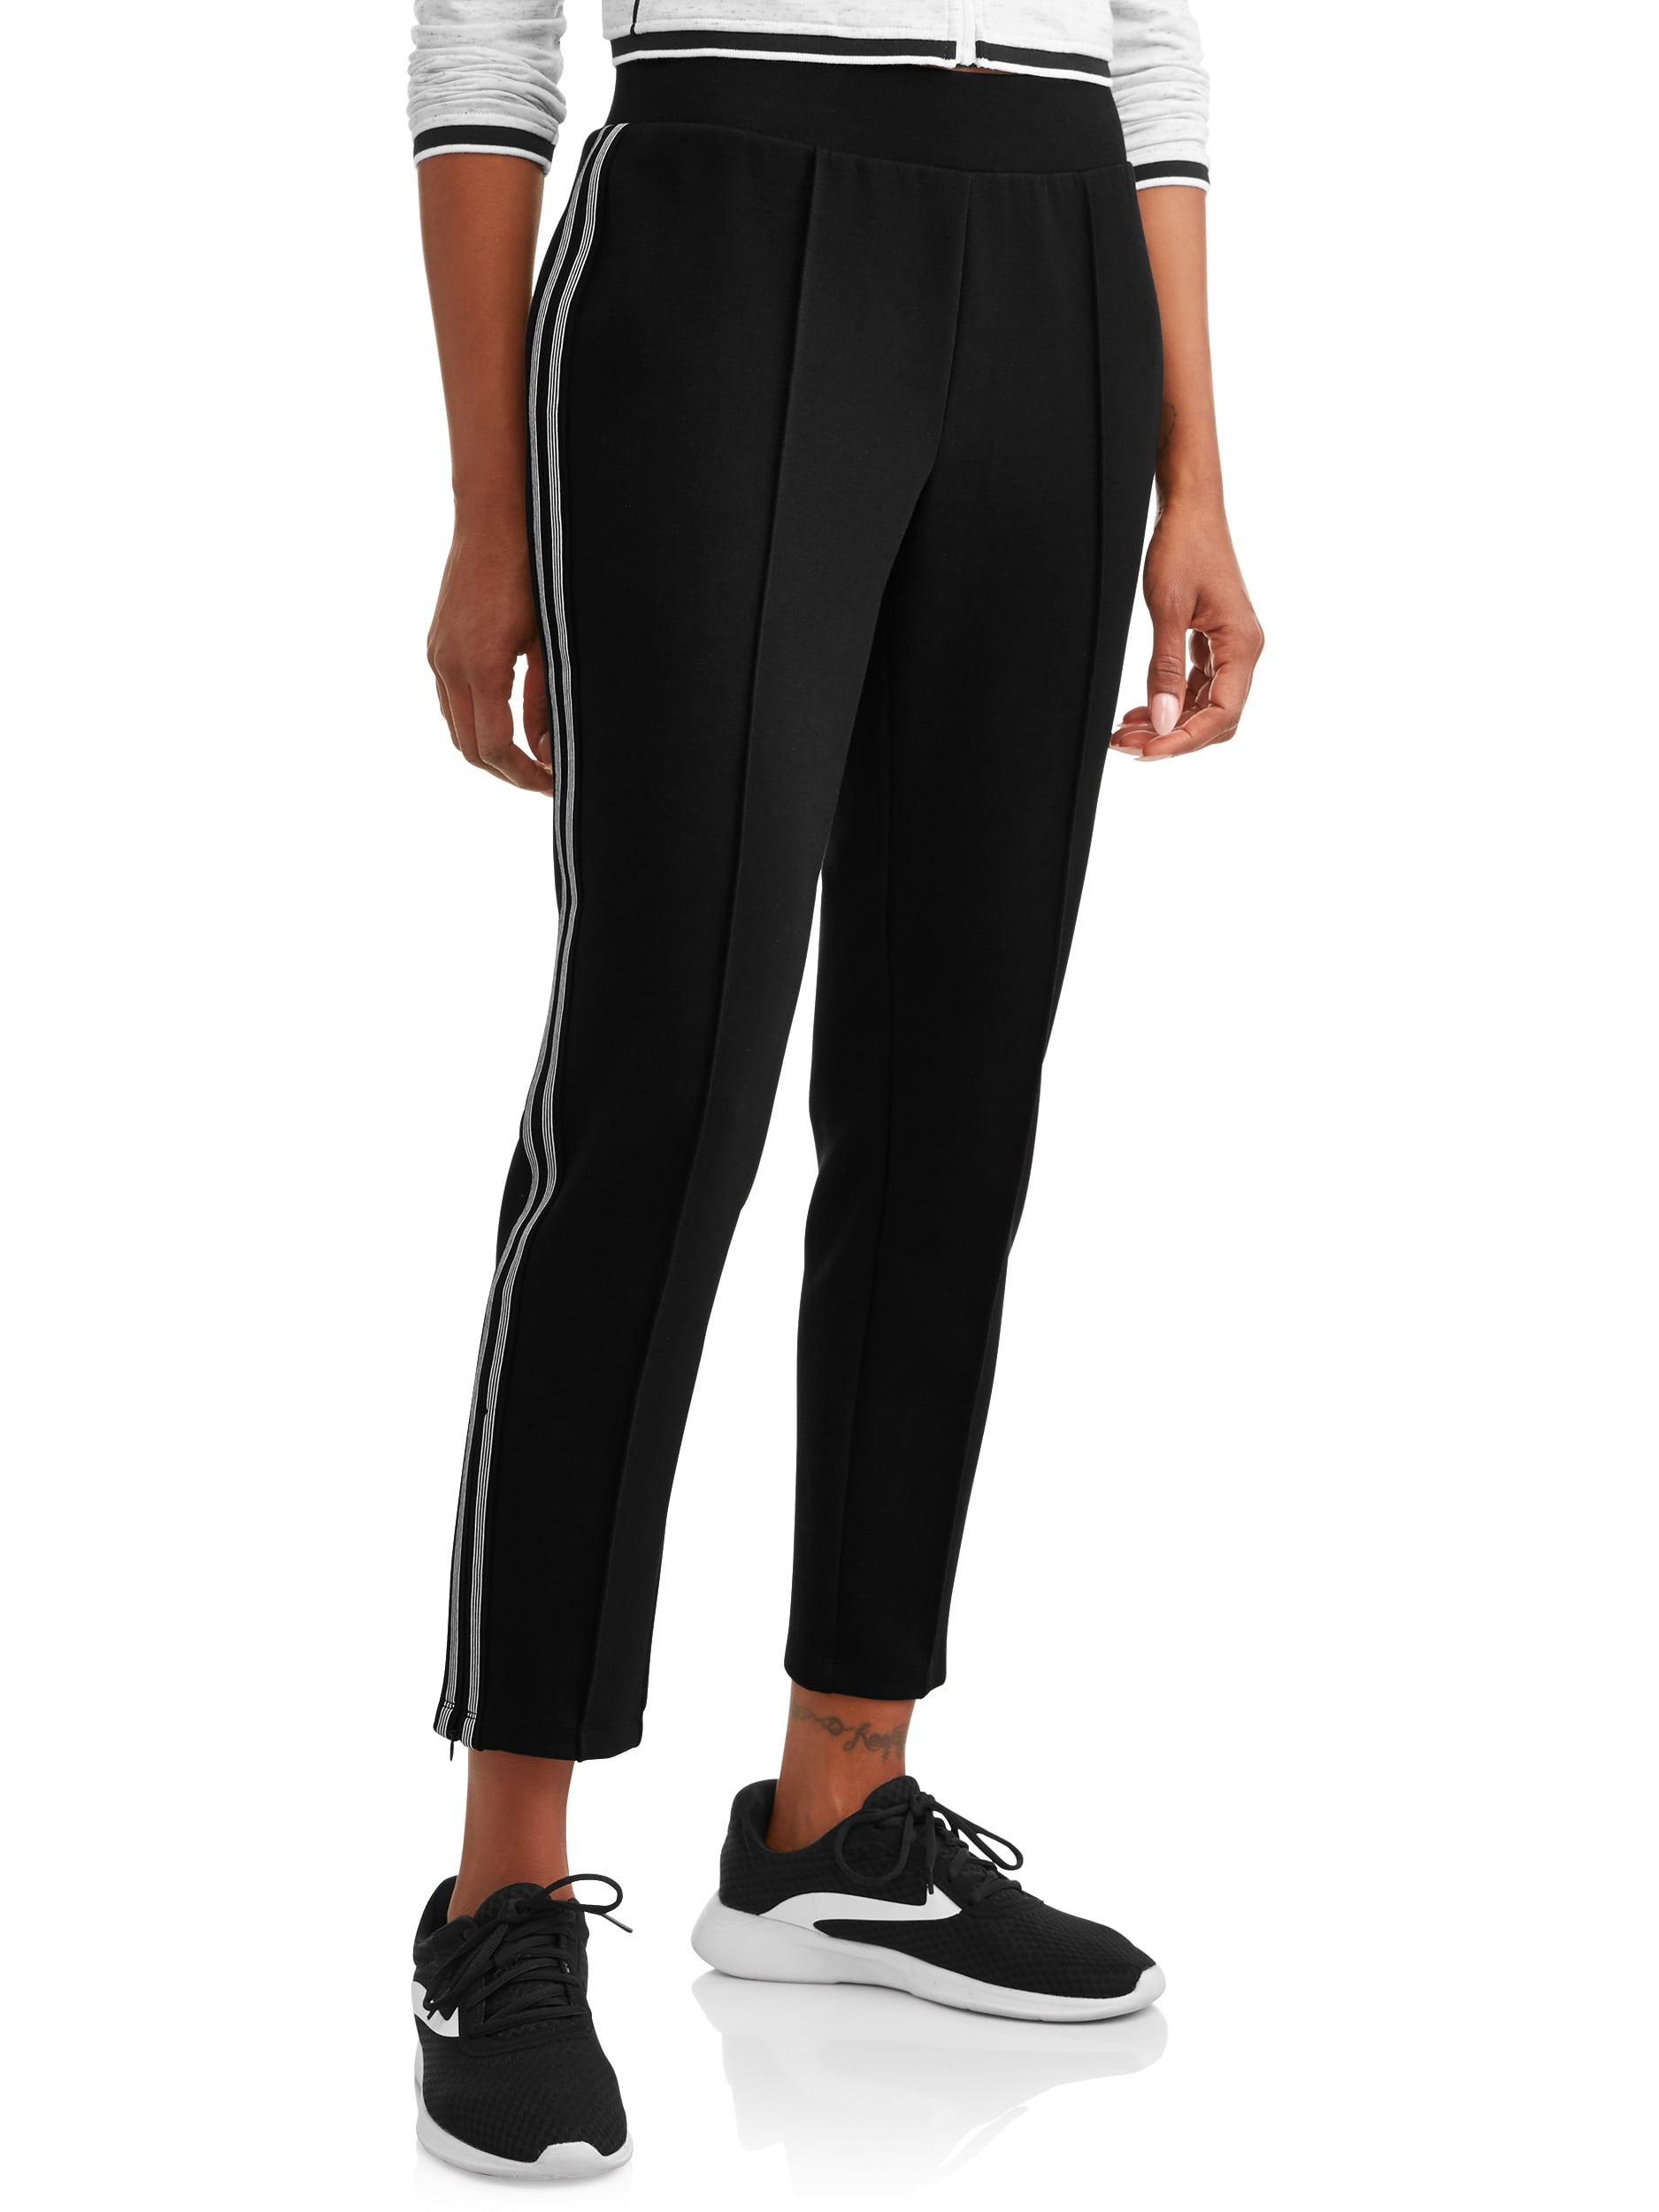 Avia Black Athletic Track Pants Elastic Waist Size L Large Zip